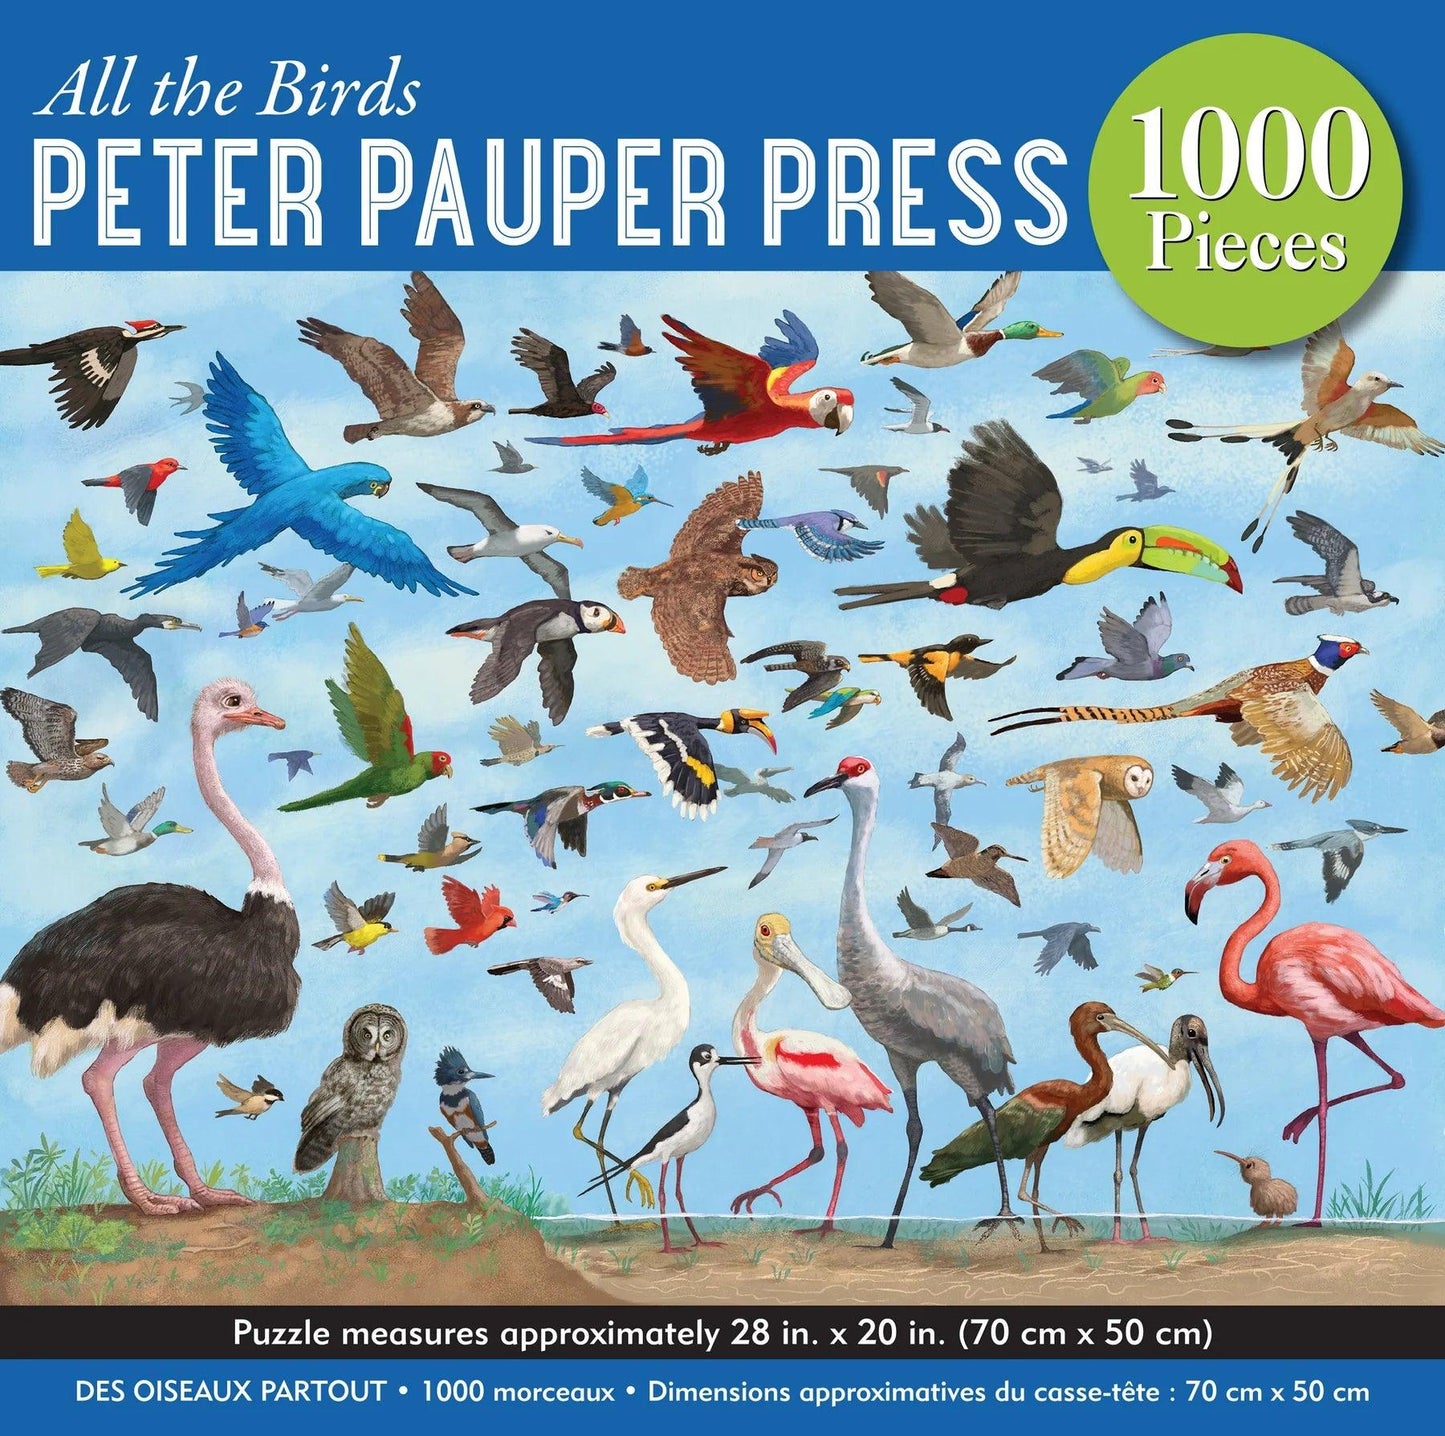 Peter Pauper All The Birds 1000 Pieces Jigsaw Puzzle - Eclipse Games Puzzles Novelties